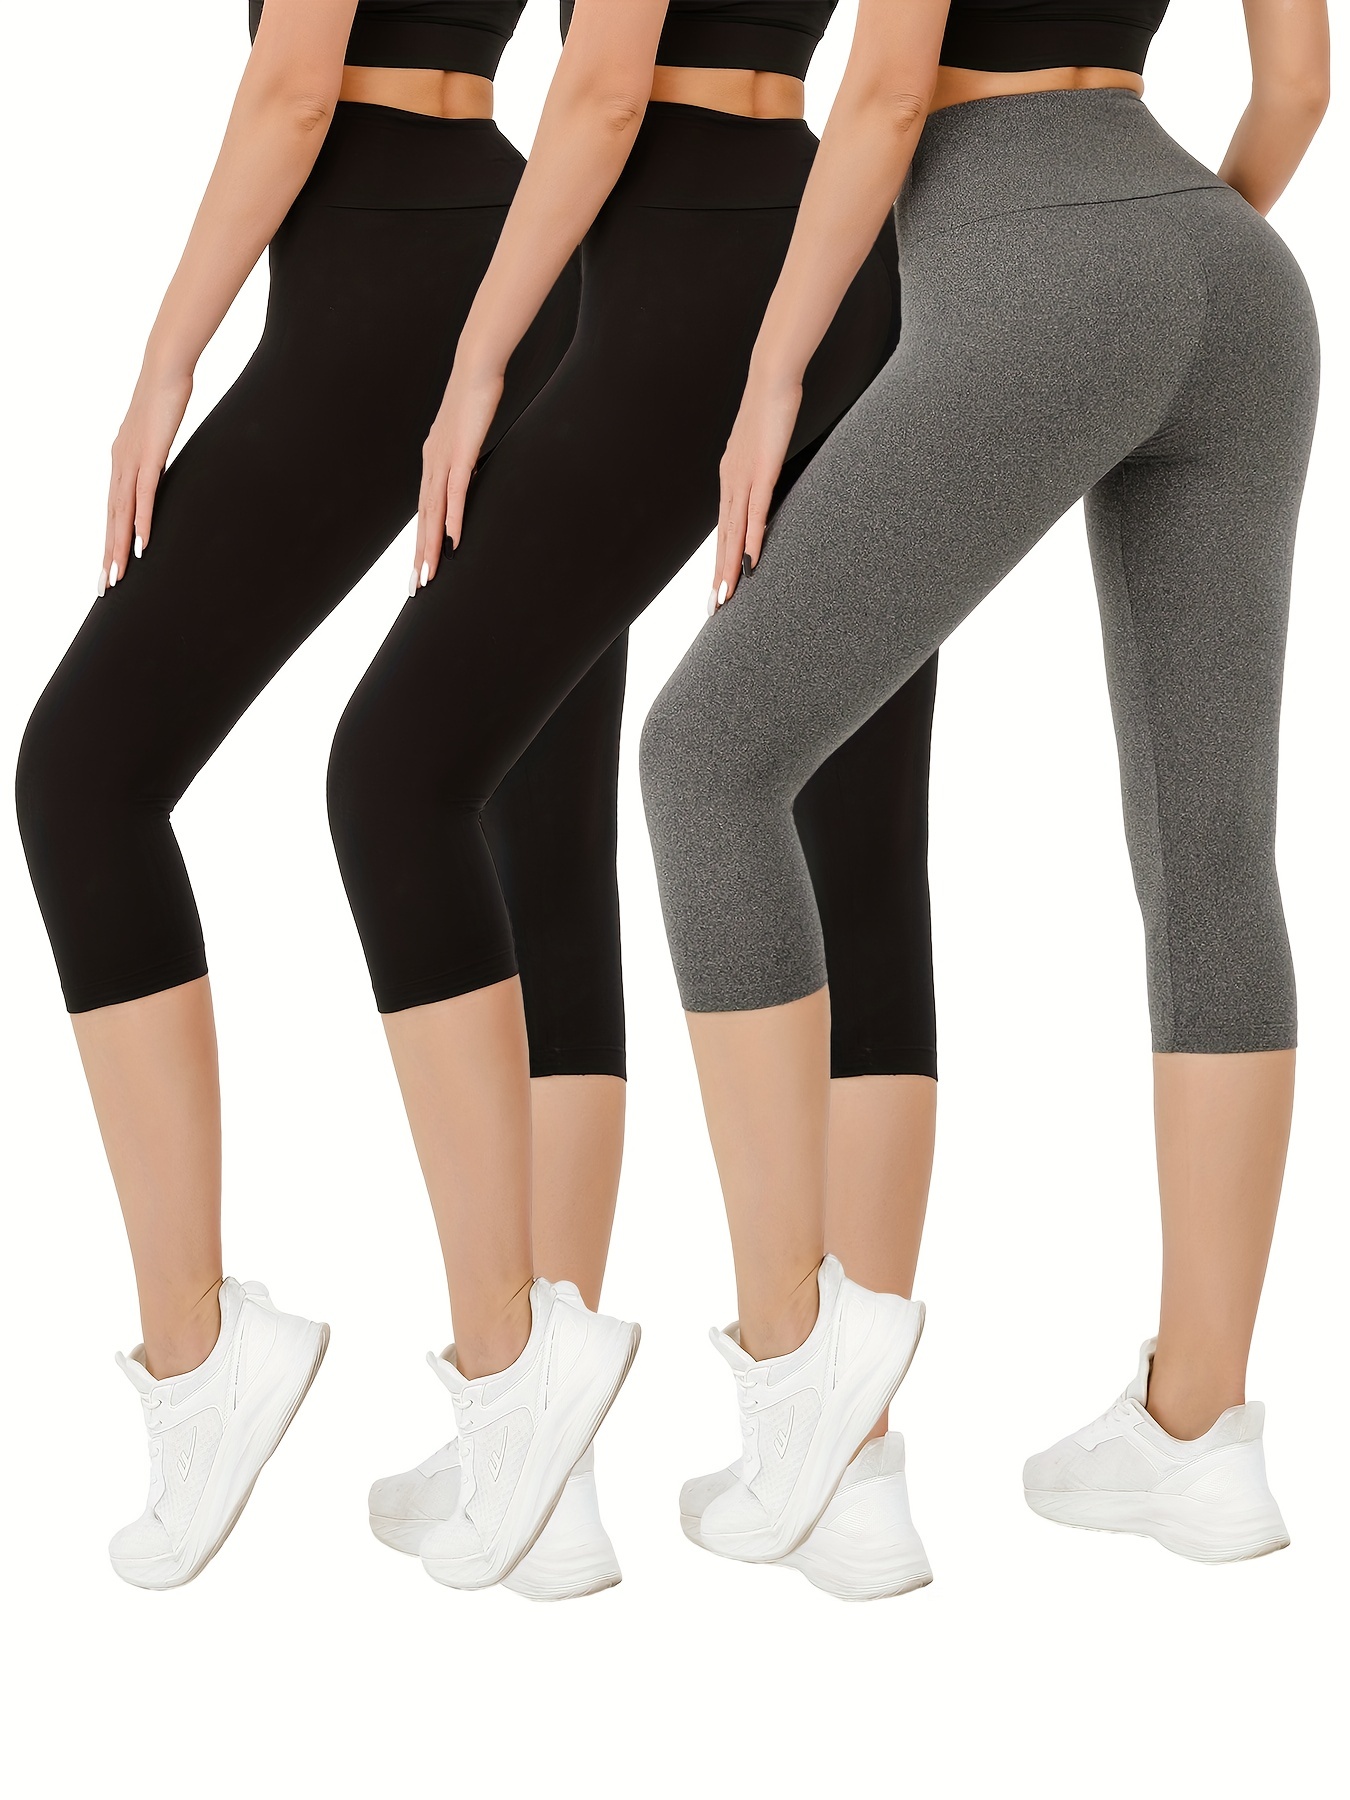 Yoga Capris for Women High Waisted Belly Control Capri Leggings